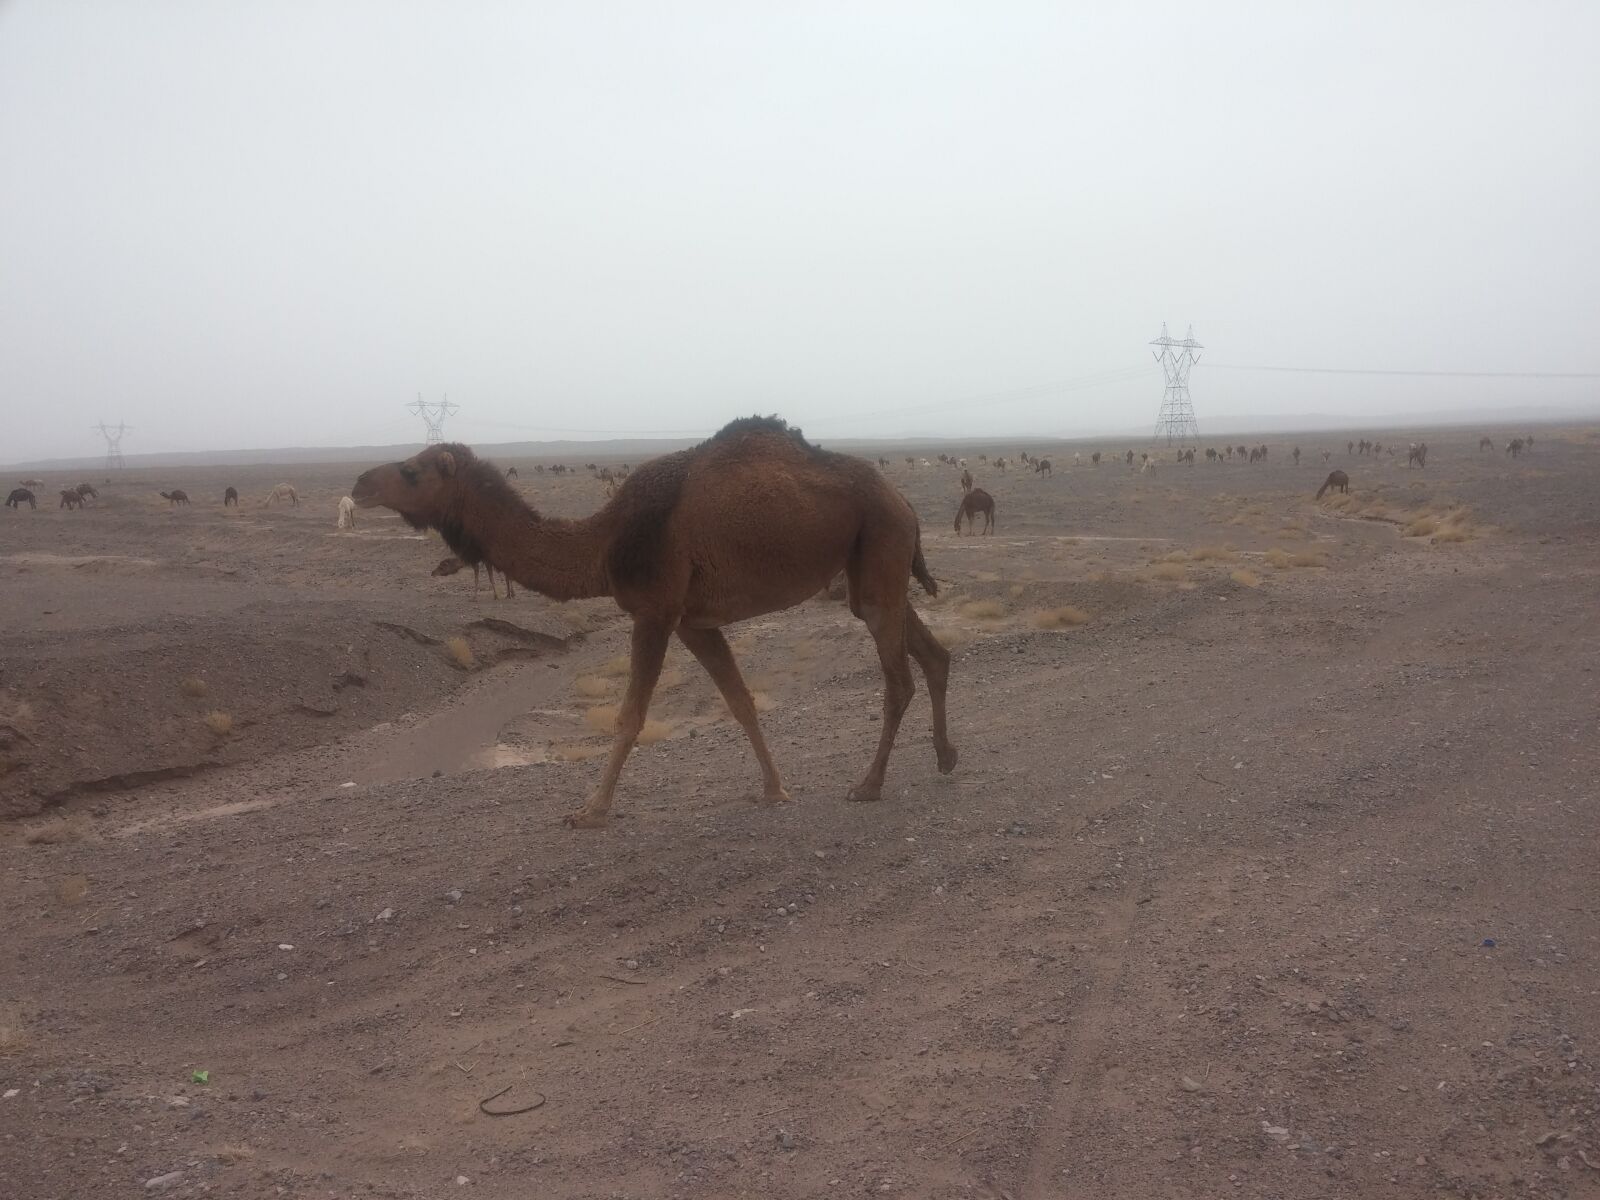 LG G2 sample photo. Camel, camels photography